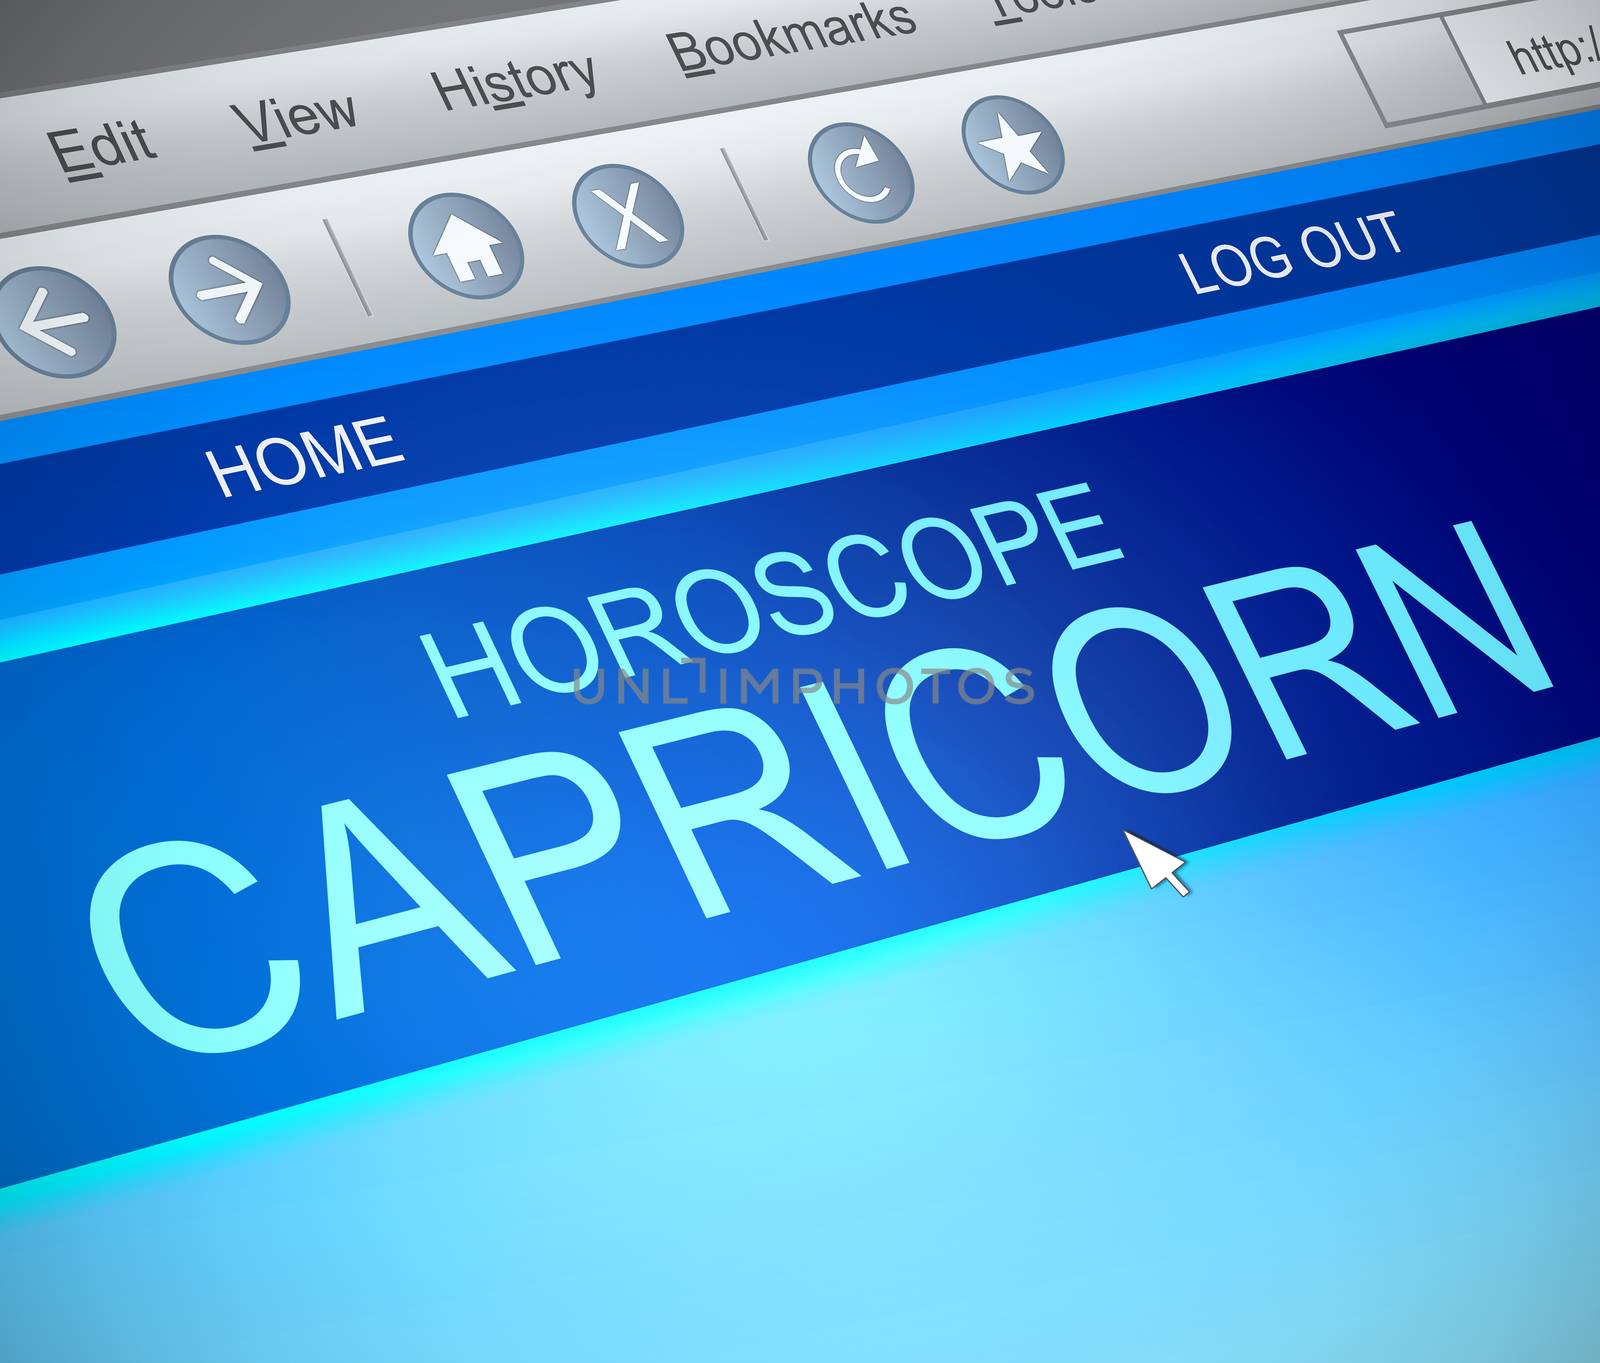 Capricorn horoscope concept. by 72soul